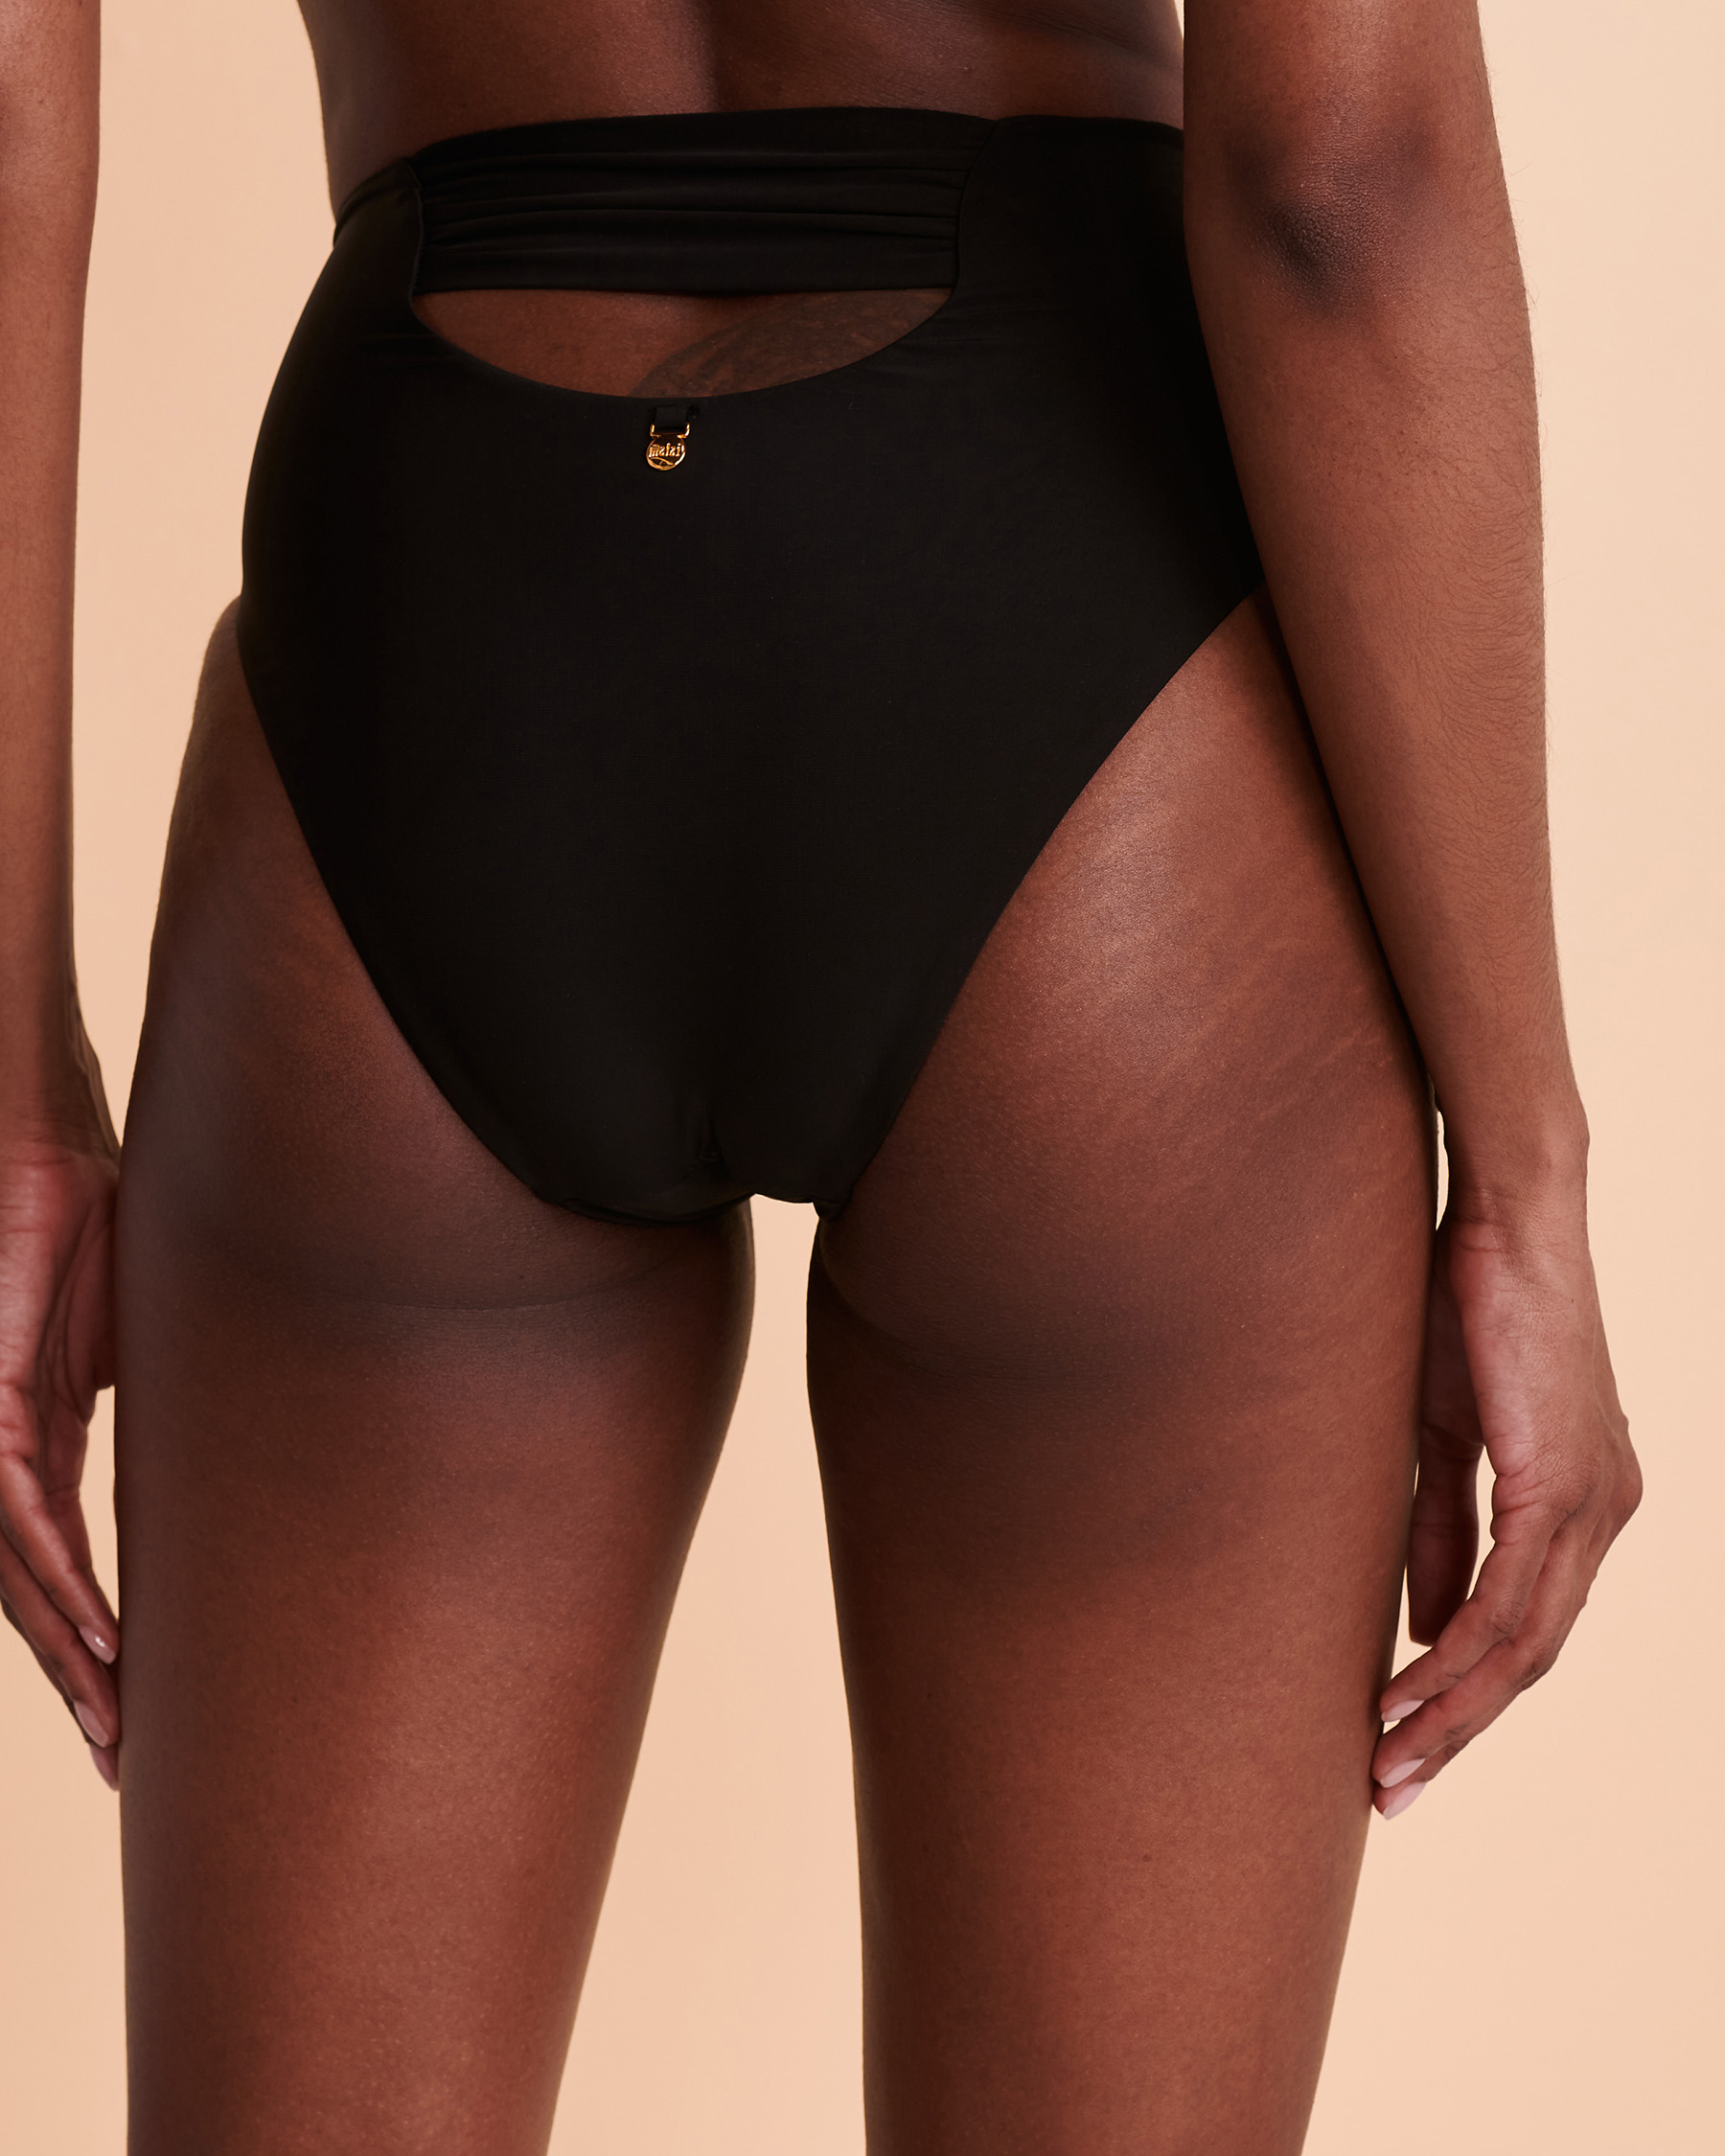 MALAI BAY High Waist Bikini Bottom Black B19001 - View3